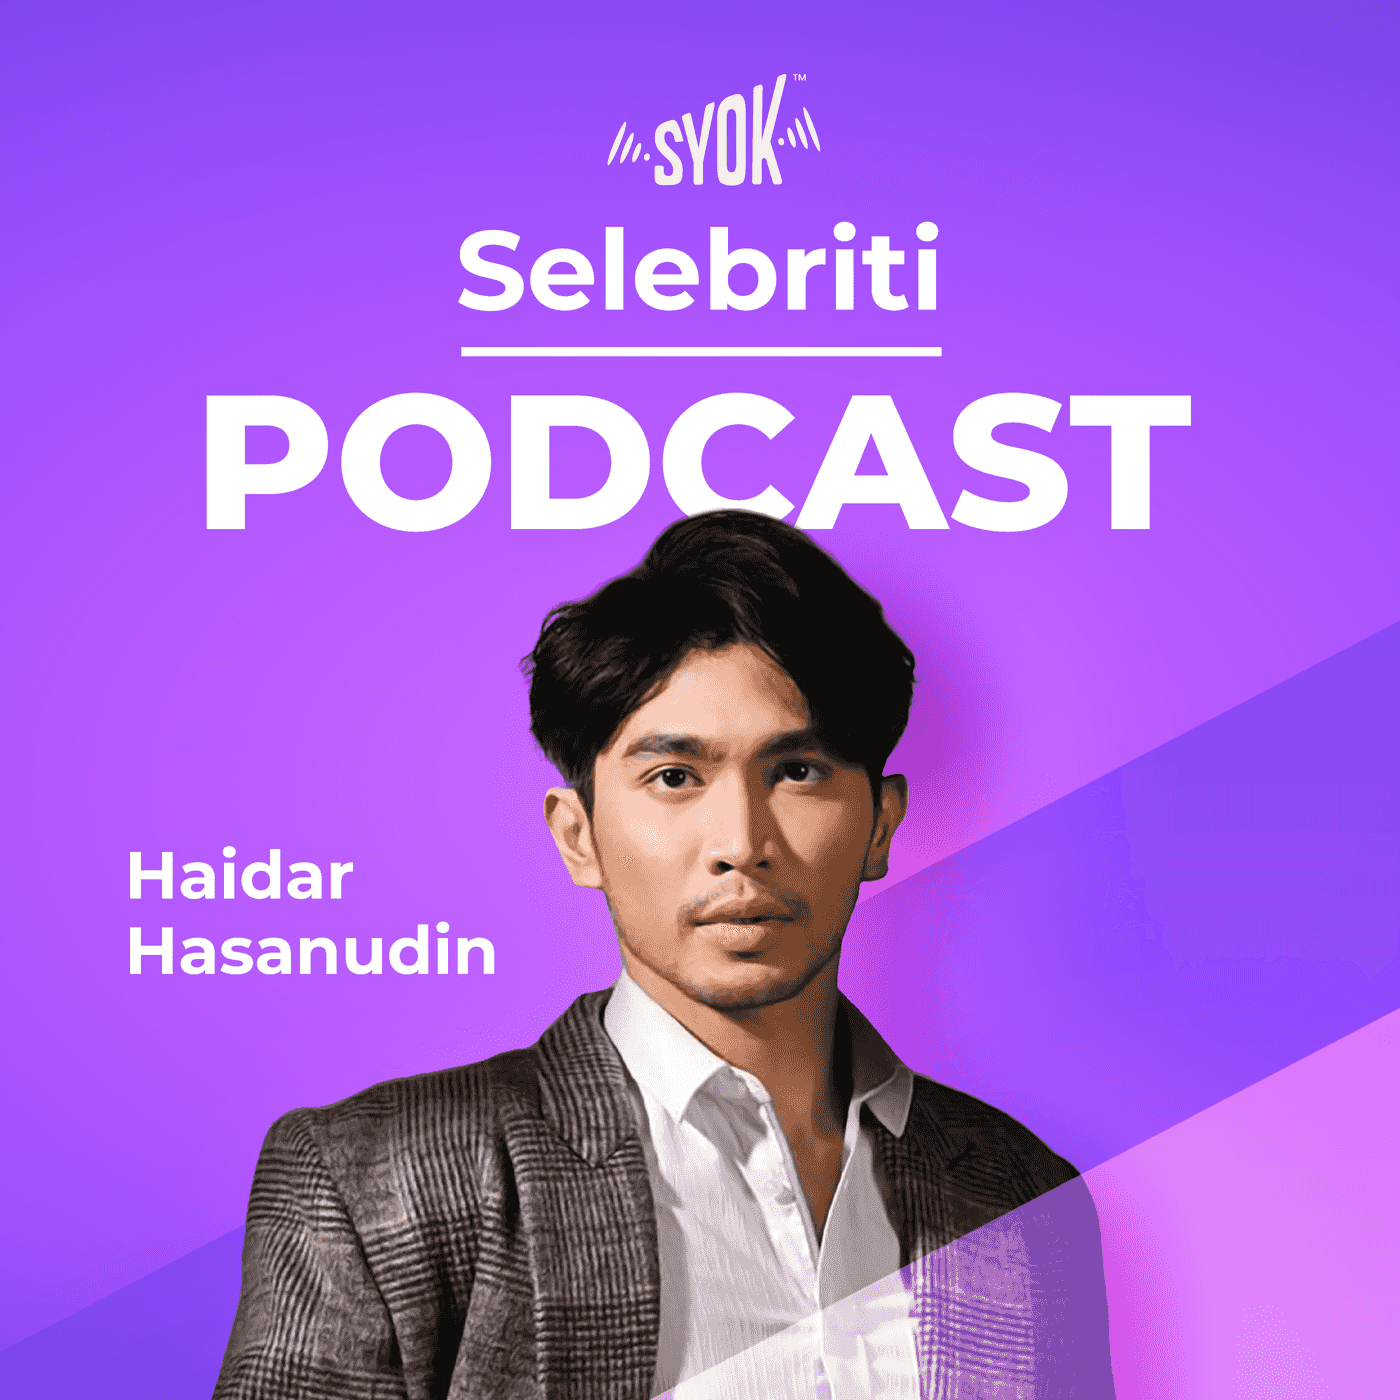 Selebriti Podcast: Haidar Hasanudin - SYOK Podcast [BM]